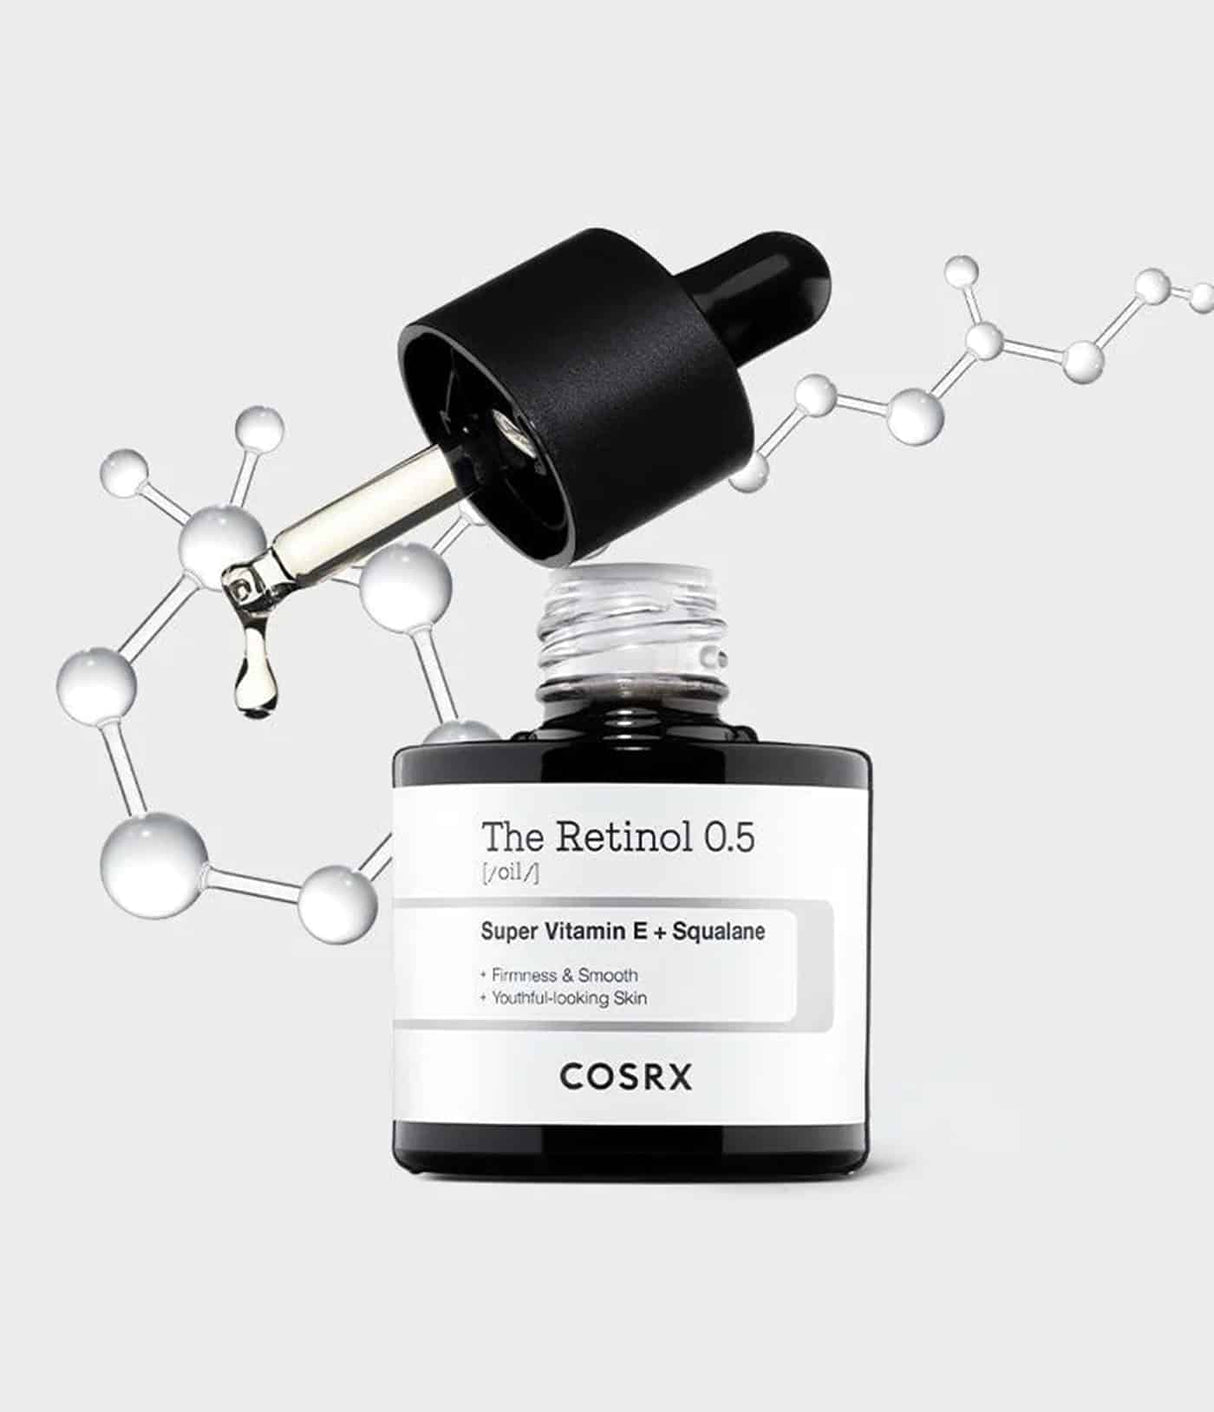 The Retinol 0.5 Oil de COSRX